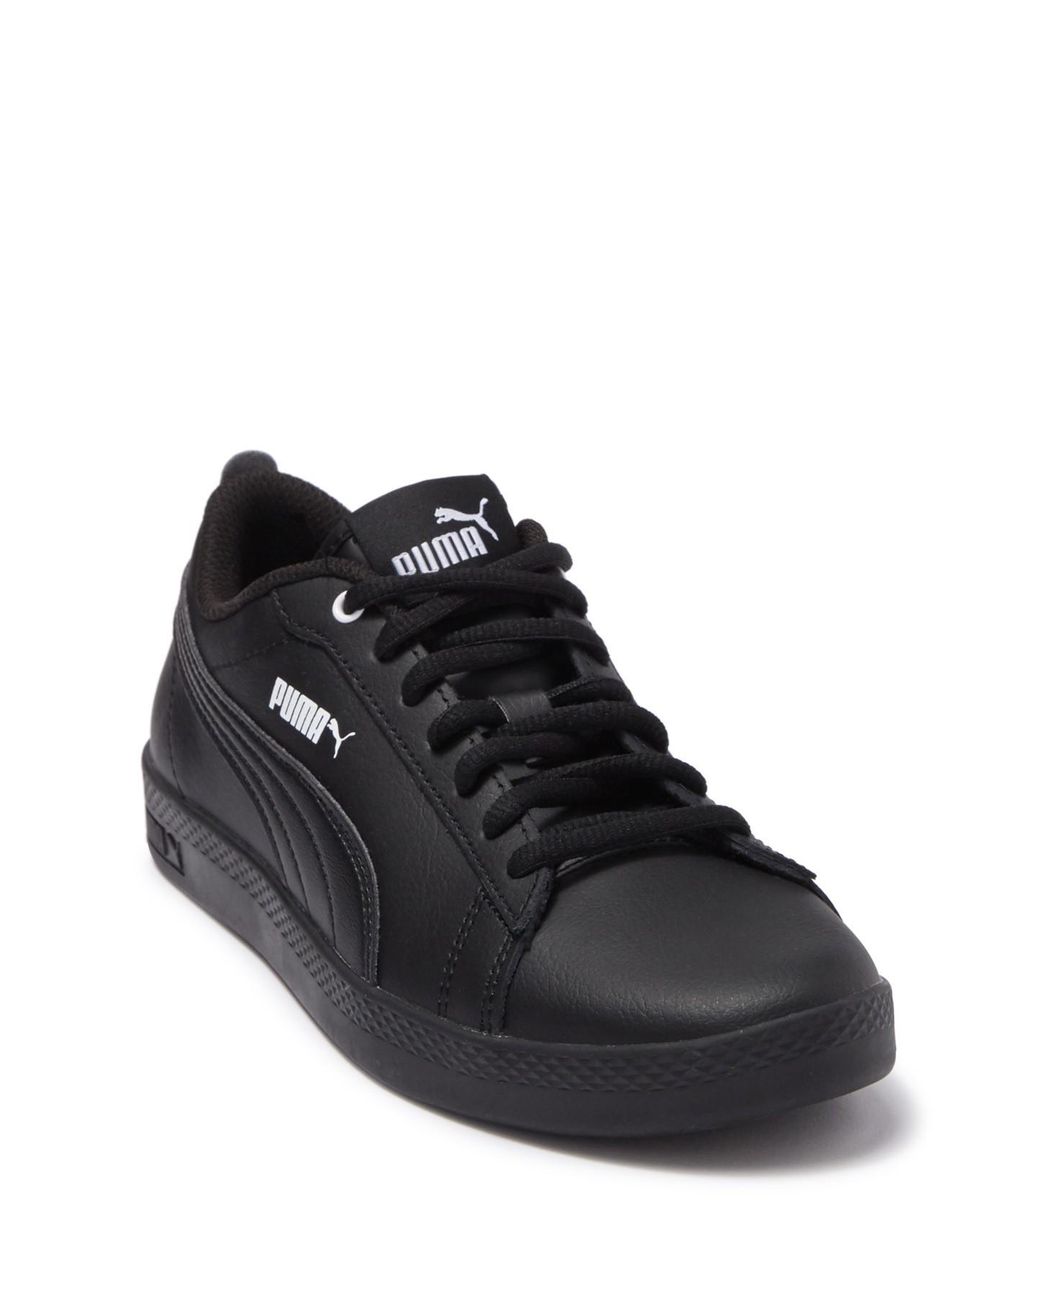 PUMA Smash V2 Leather Sneaker in Black - Save 19% - Lyst